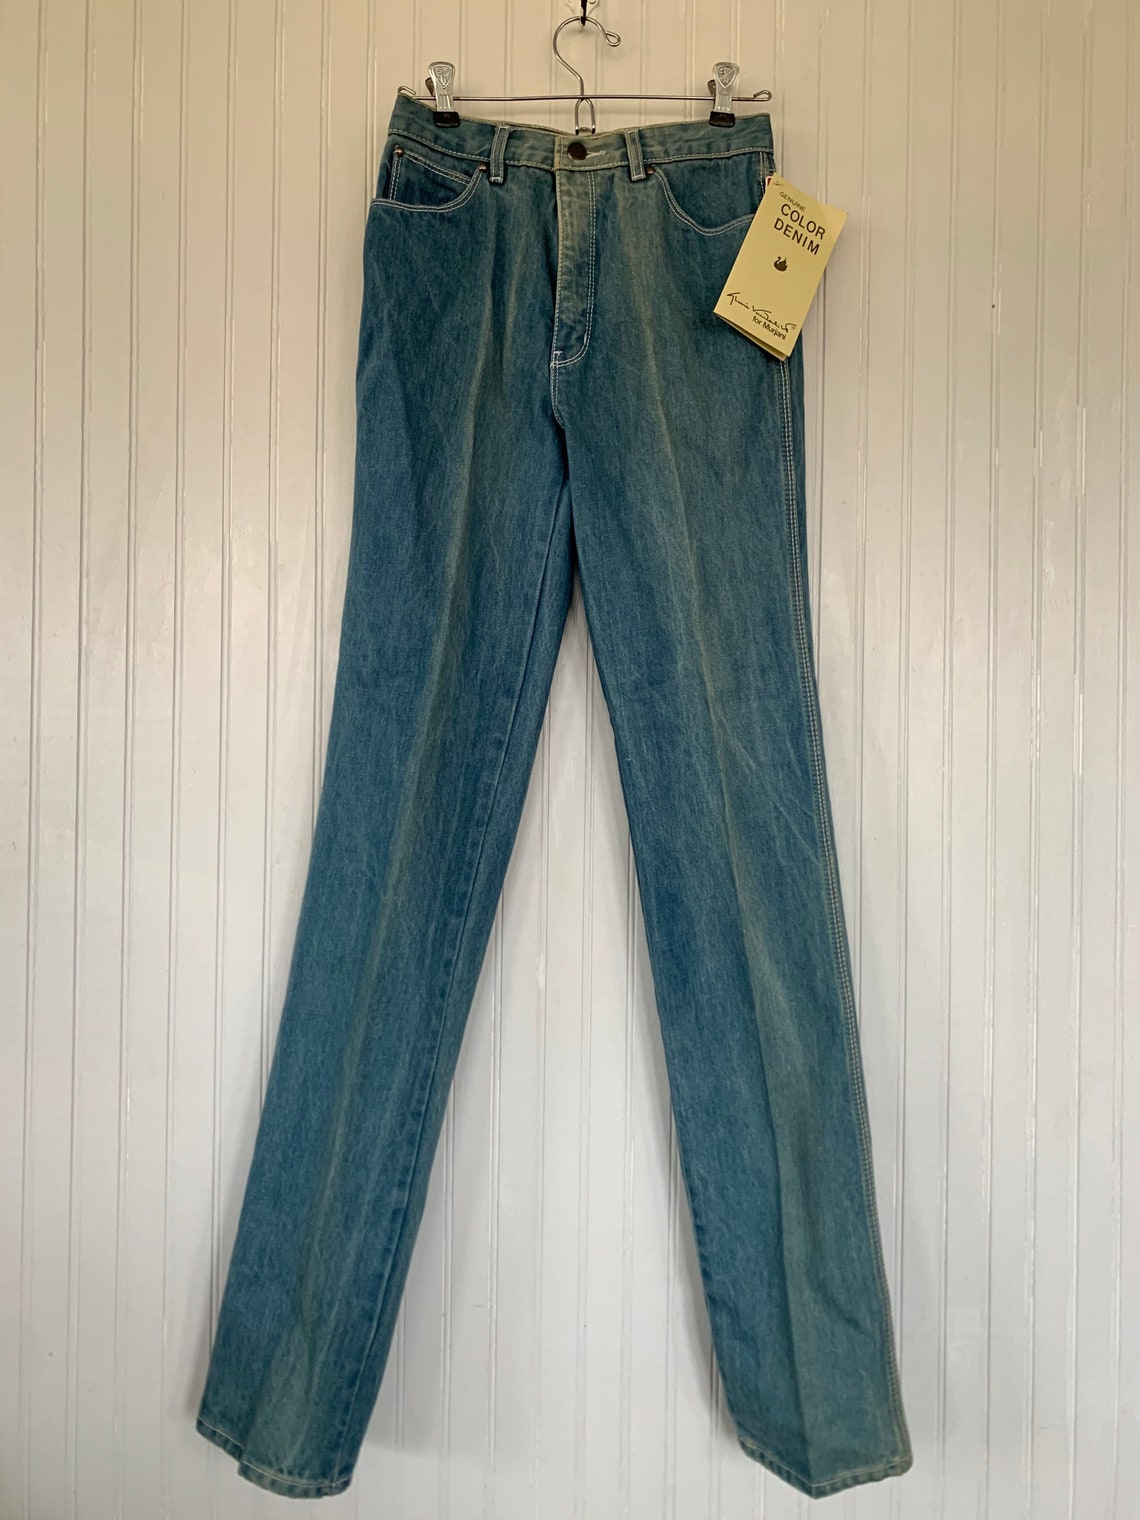 Vintage 70s 26 Gloria Vanderbilt Deadstock Light Blue Jeans | Etsy